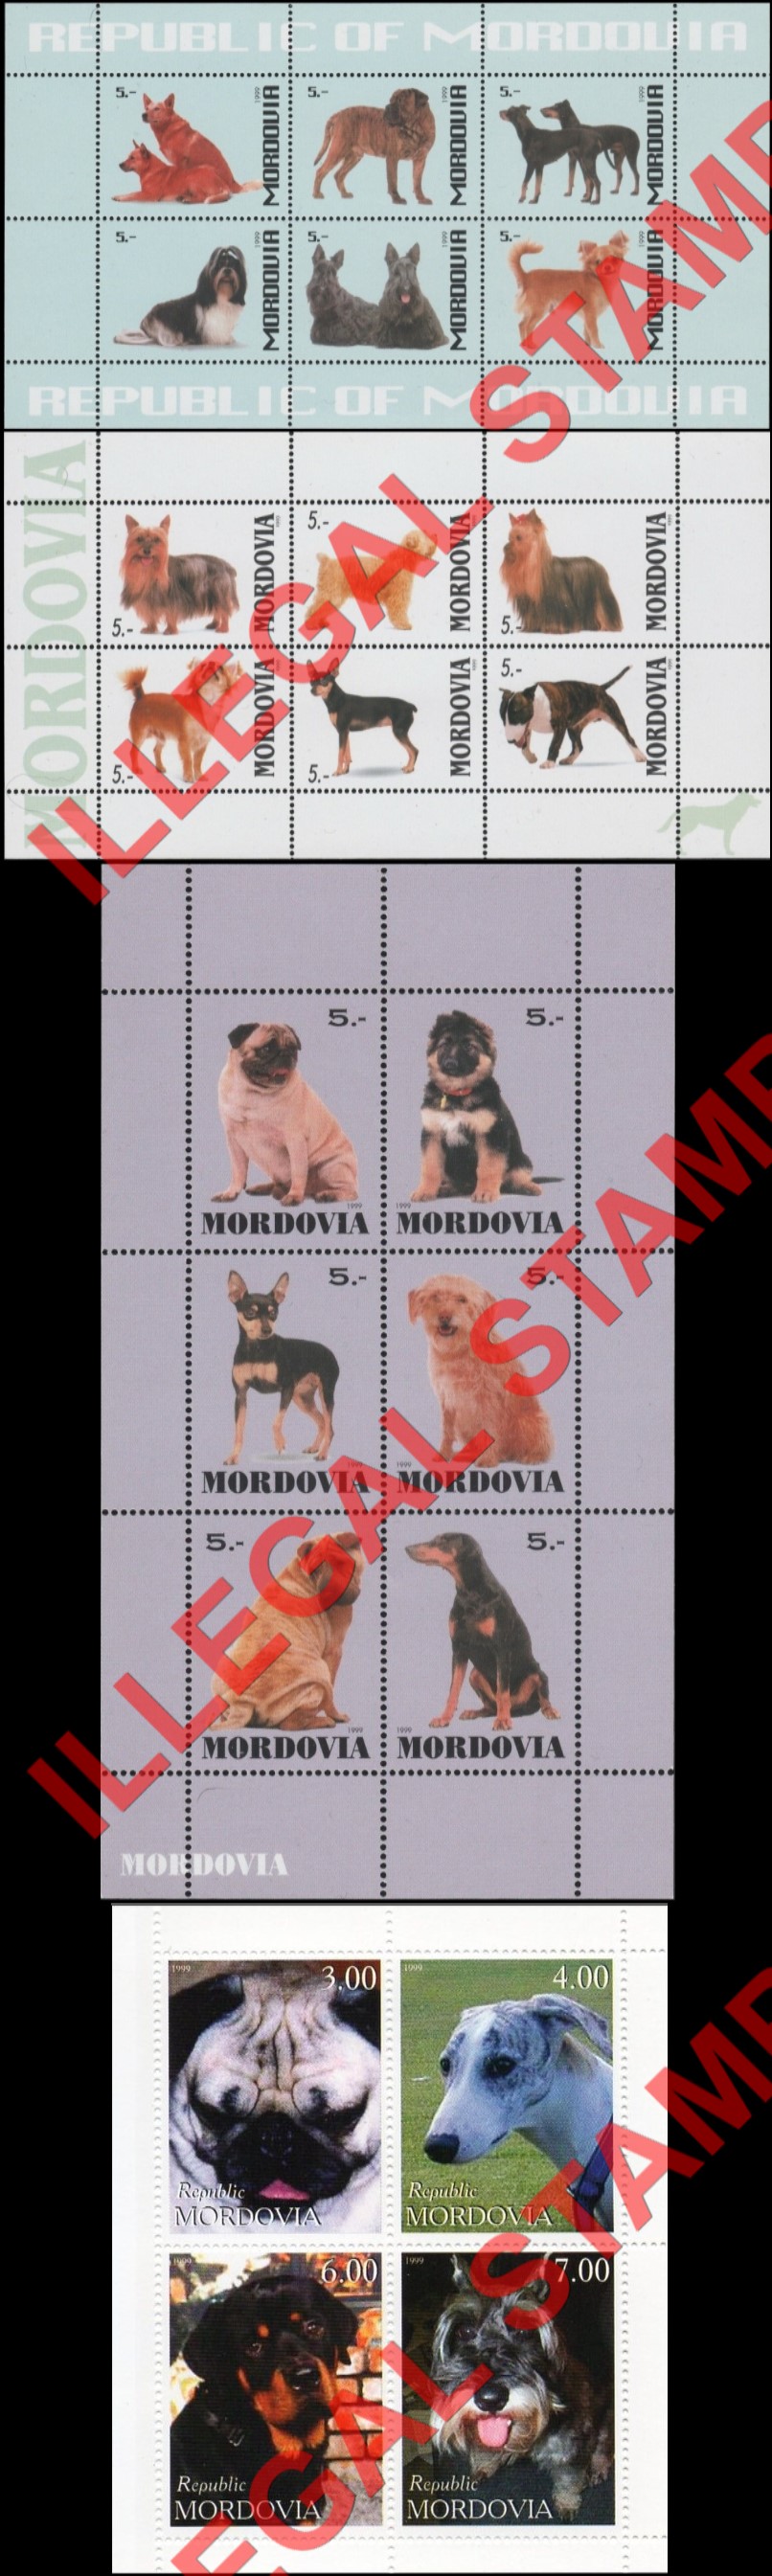 Republic of Mordovia 1999 Counterfeit Illegal Stamps (Part 1)